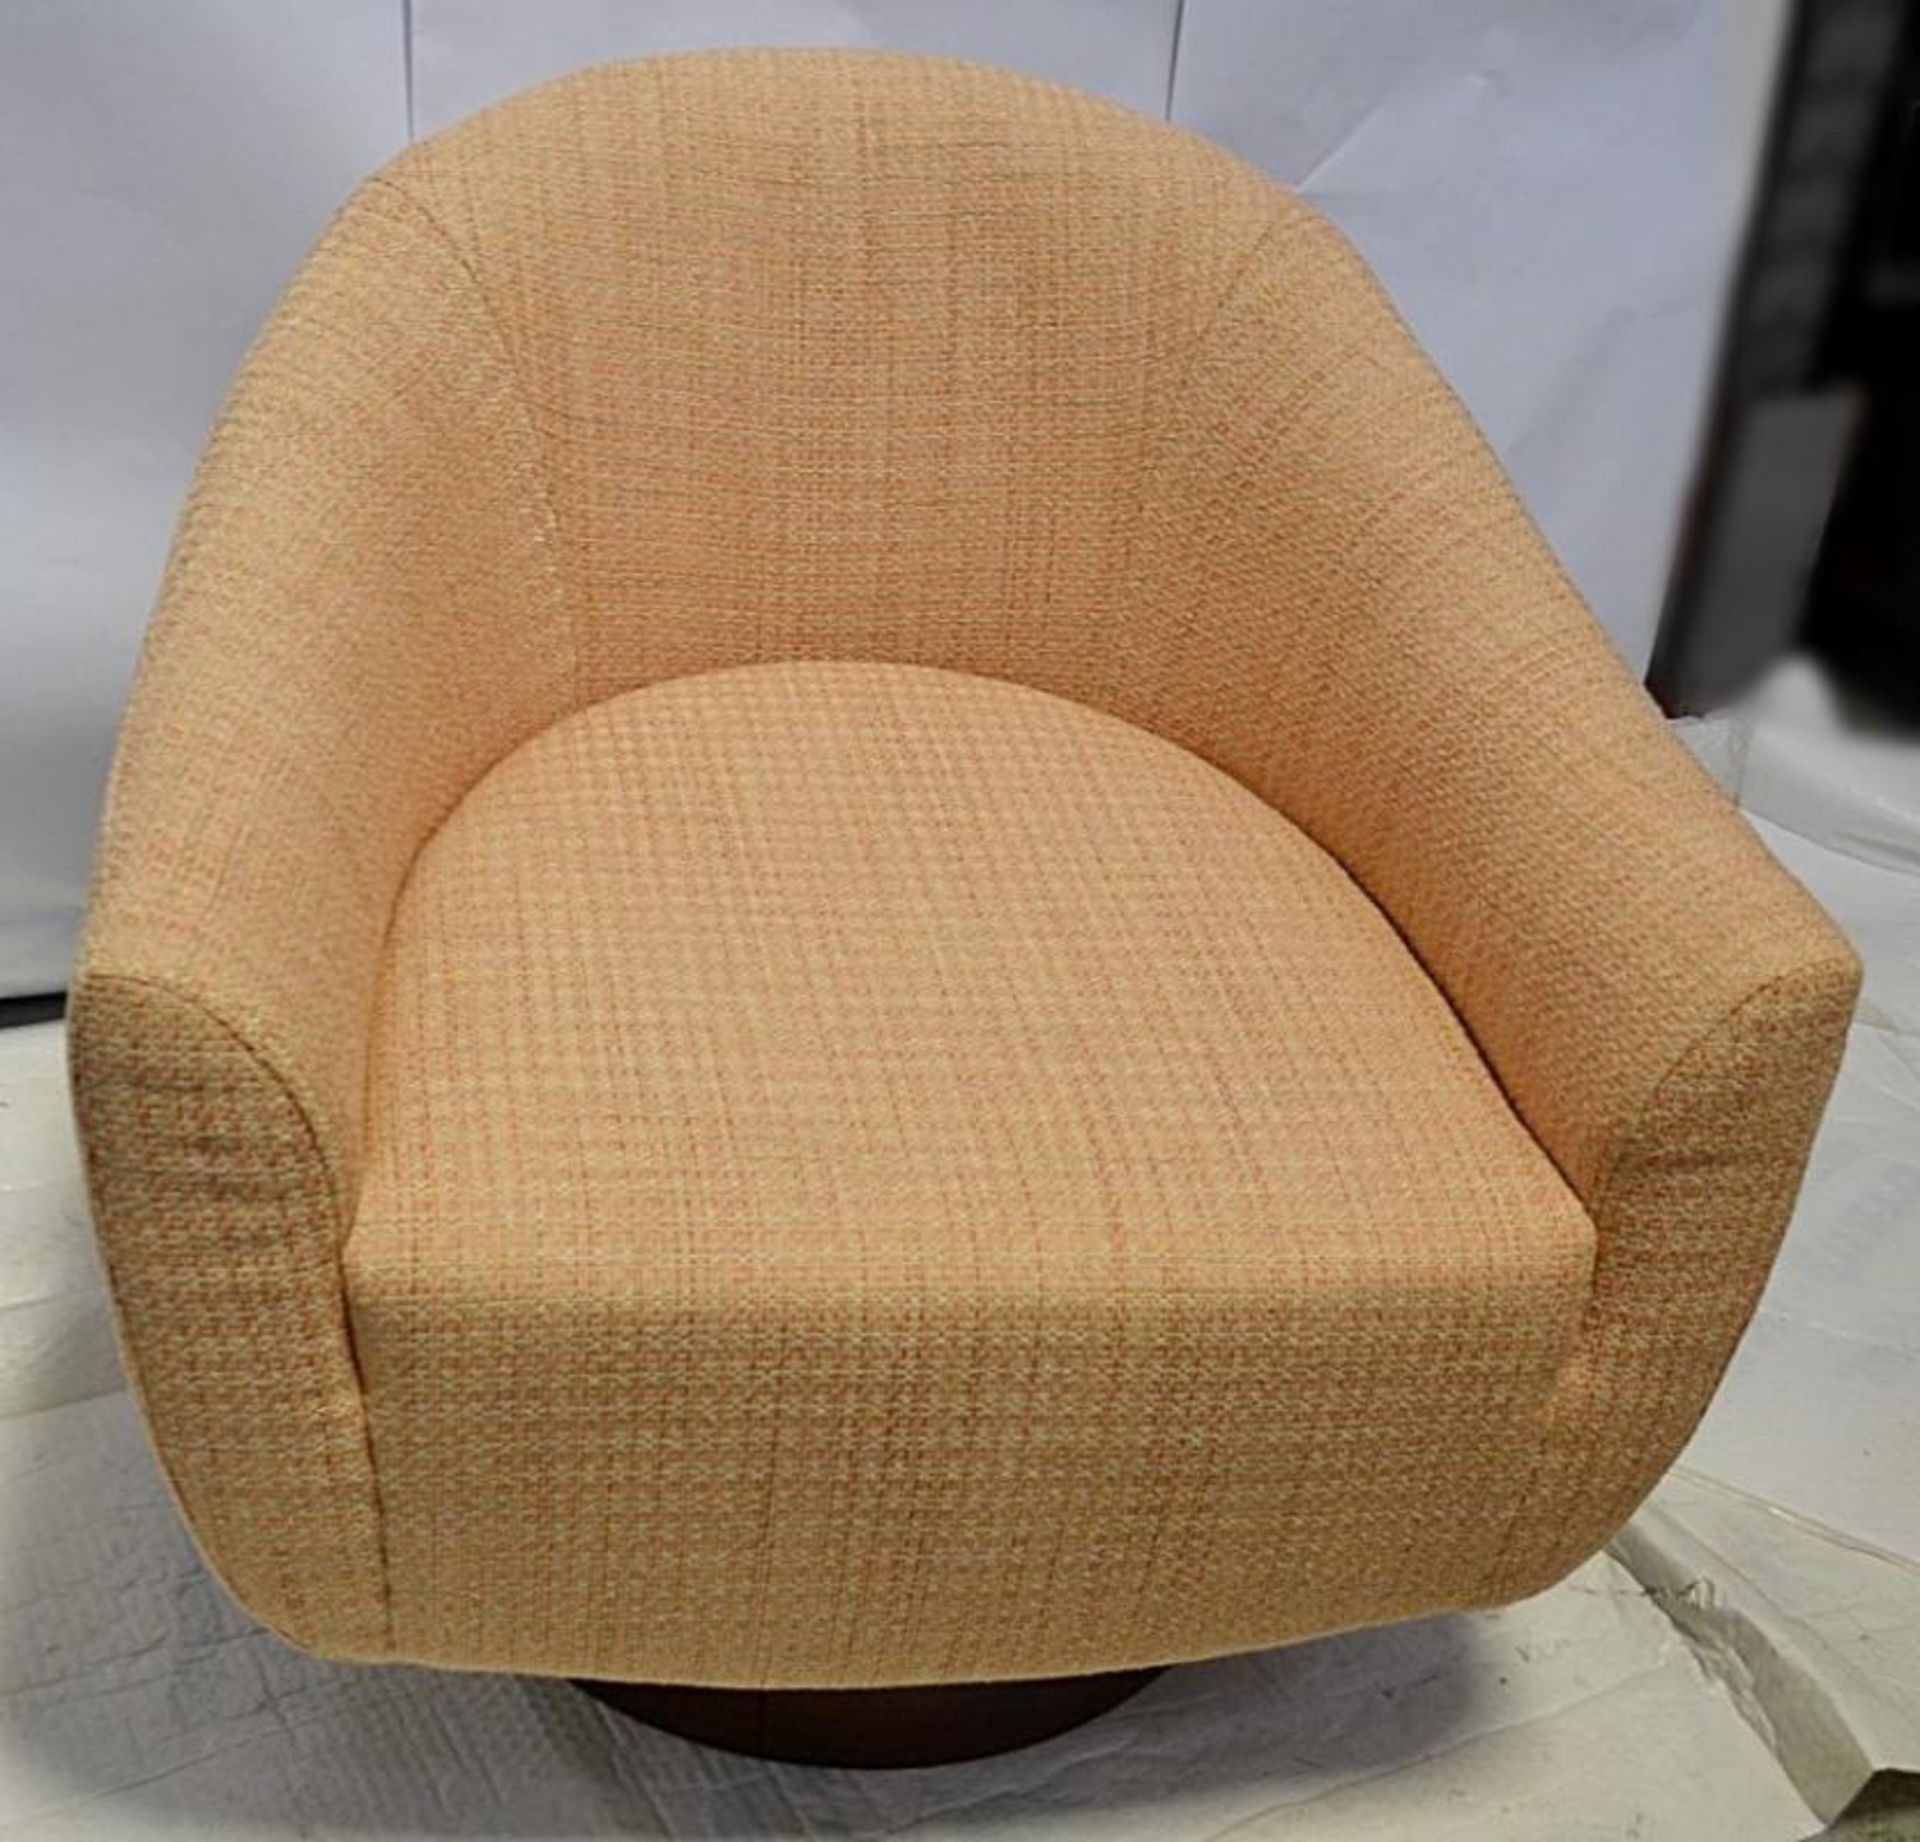 1 x KELLY WEARSTLER Sonara Swivel Chair Rosewood - Dimensions: 31” W x 35” D x 31” H - Ex-Display In - Image 25 of 28